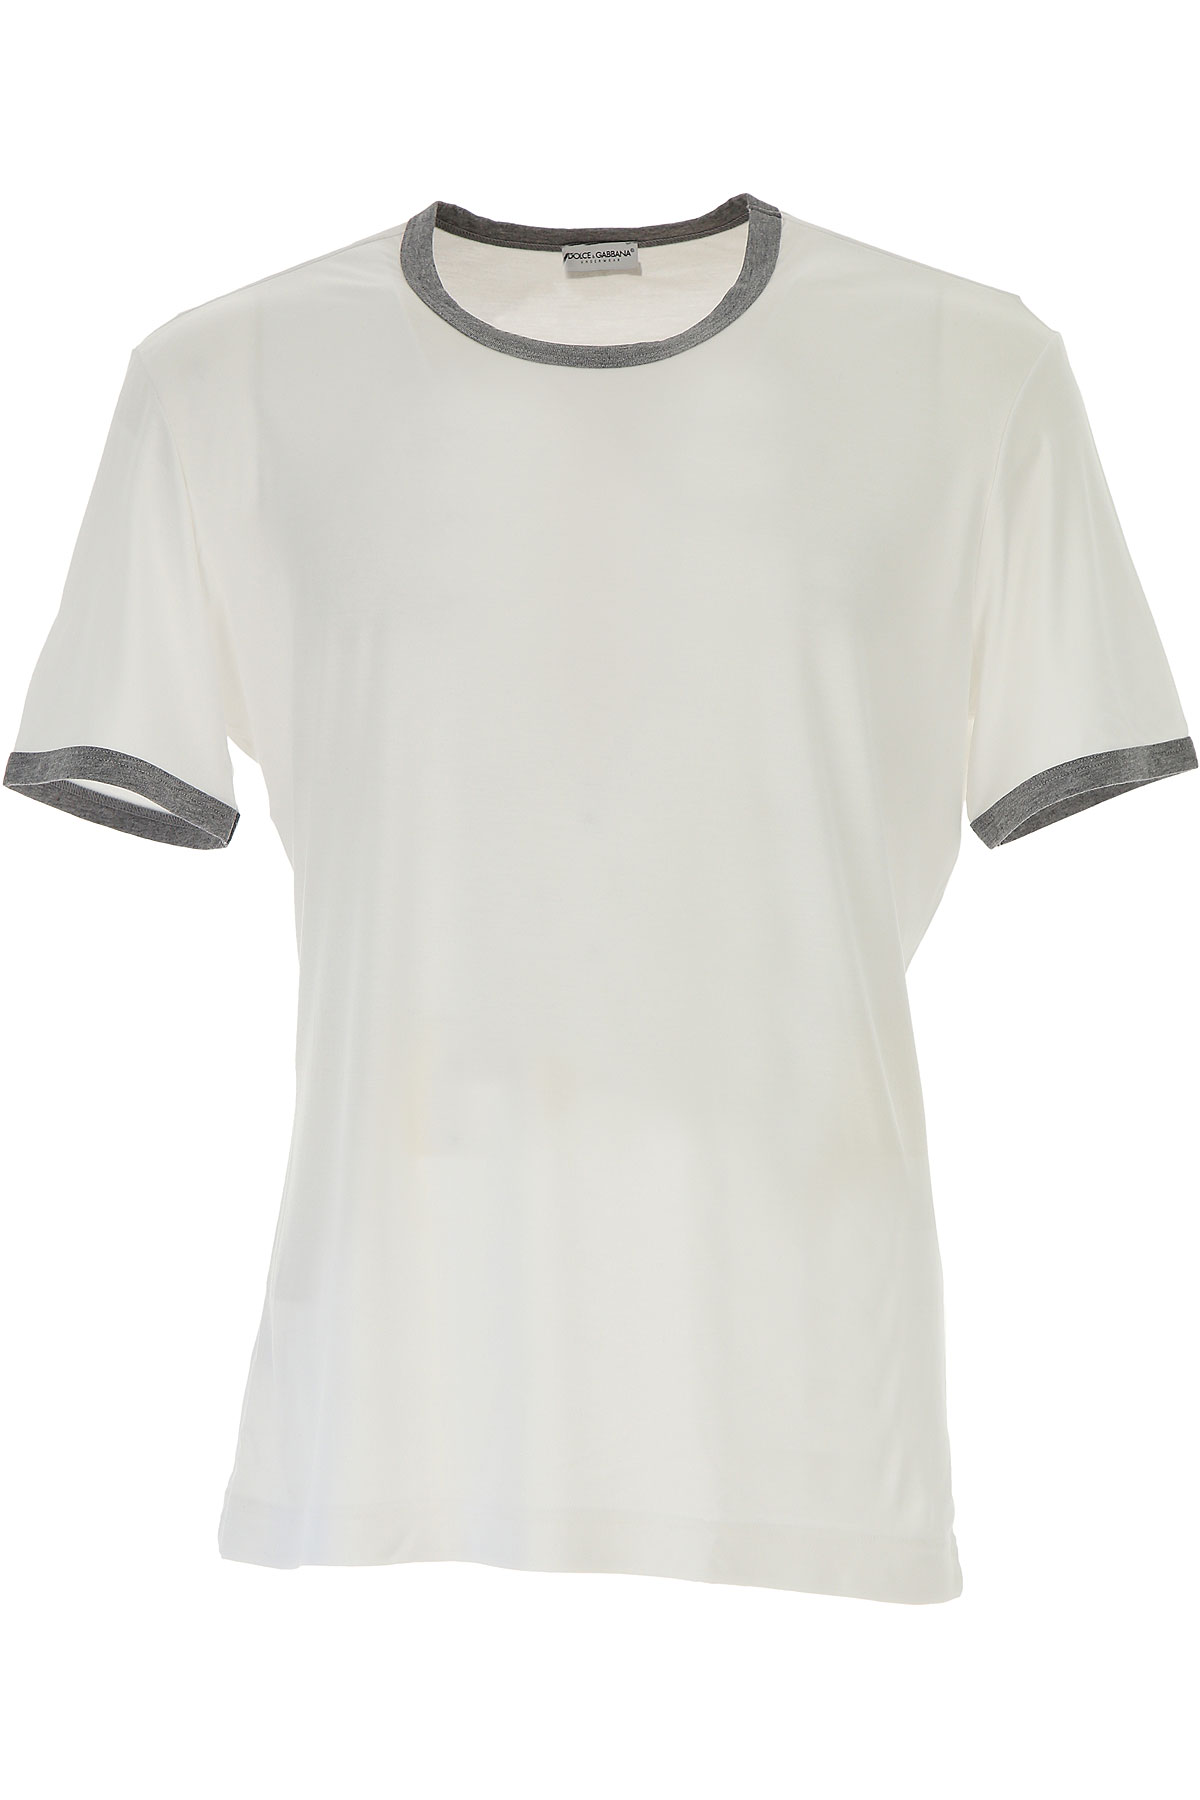 Dolce & Gabbana T-shirt Homme , Blanc, Modal, 2017, L M S XL